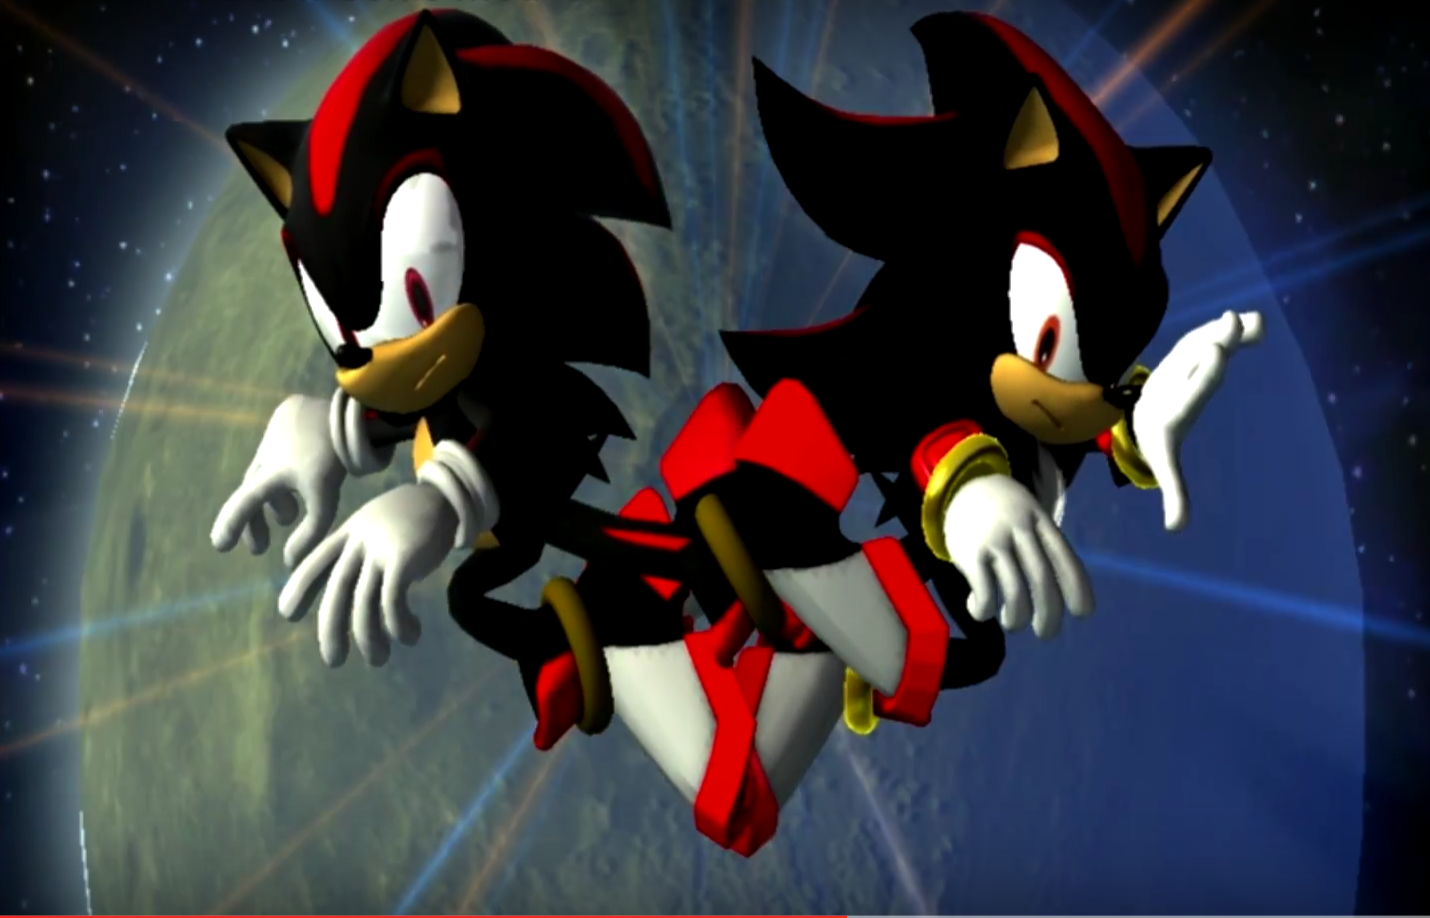 Shadow the Hedgehog in Sonic the Hedgehog (2011)